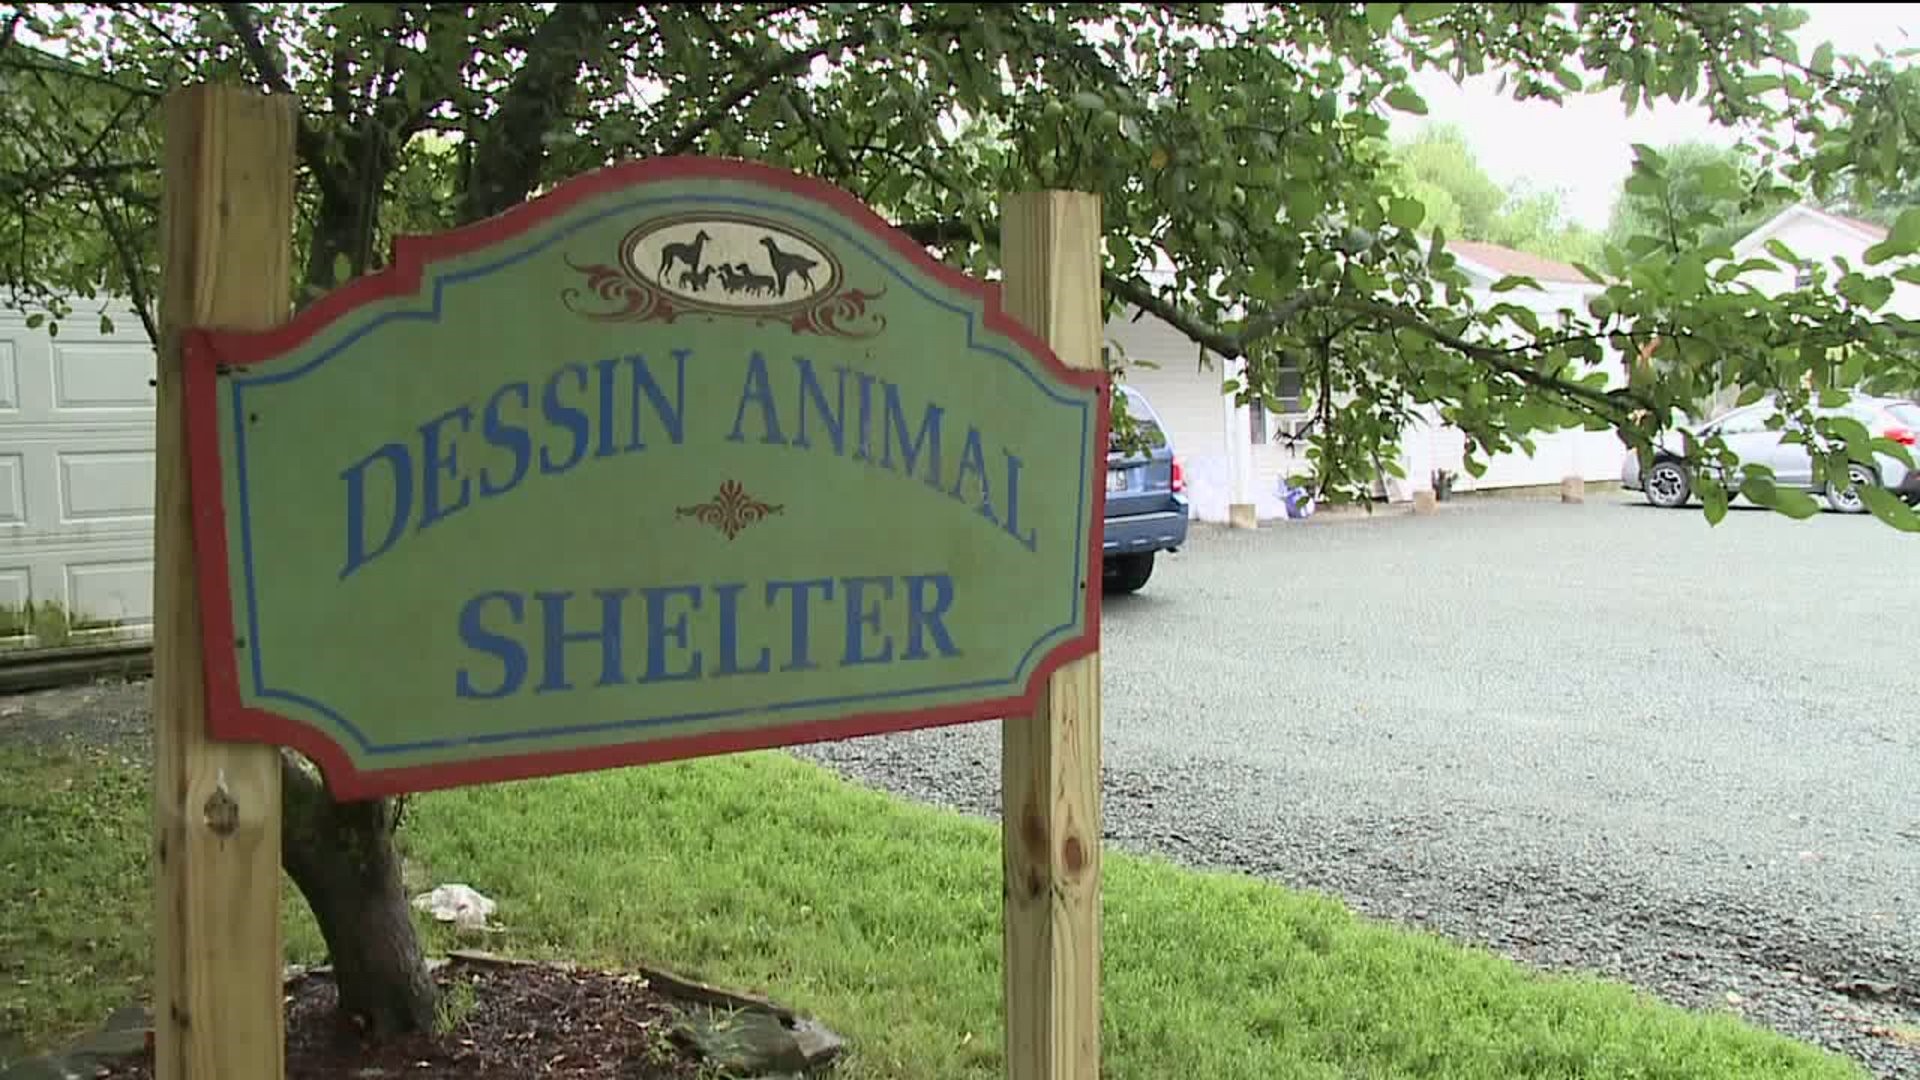 Workers, Volunteers Sprucing Up Dessin Animal Shelter